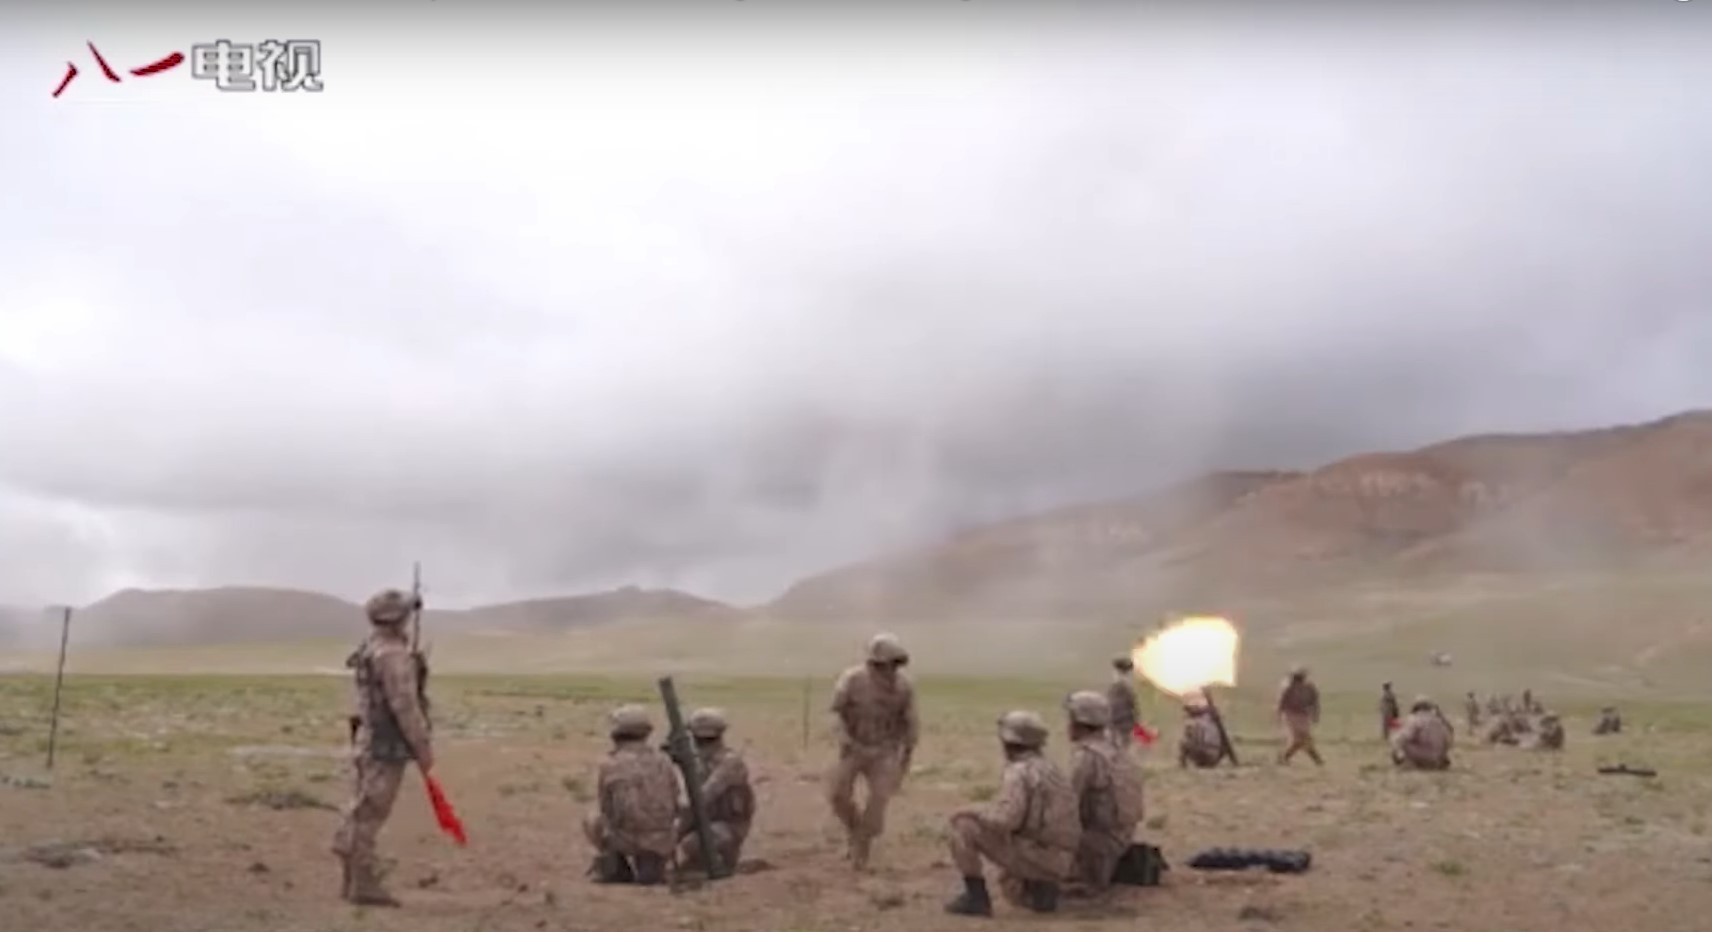 PLA conducts drills in the Himalayas/Tibet. (Screenshot via YouTube).